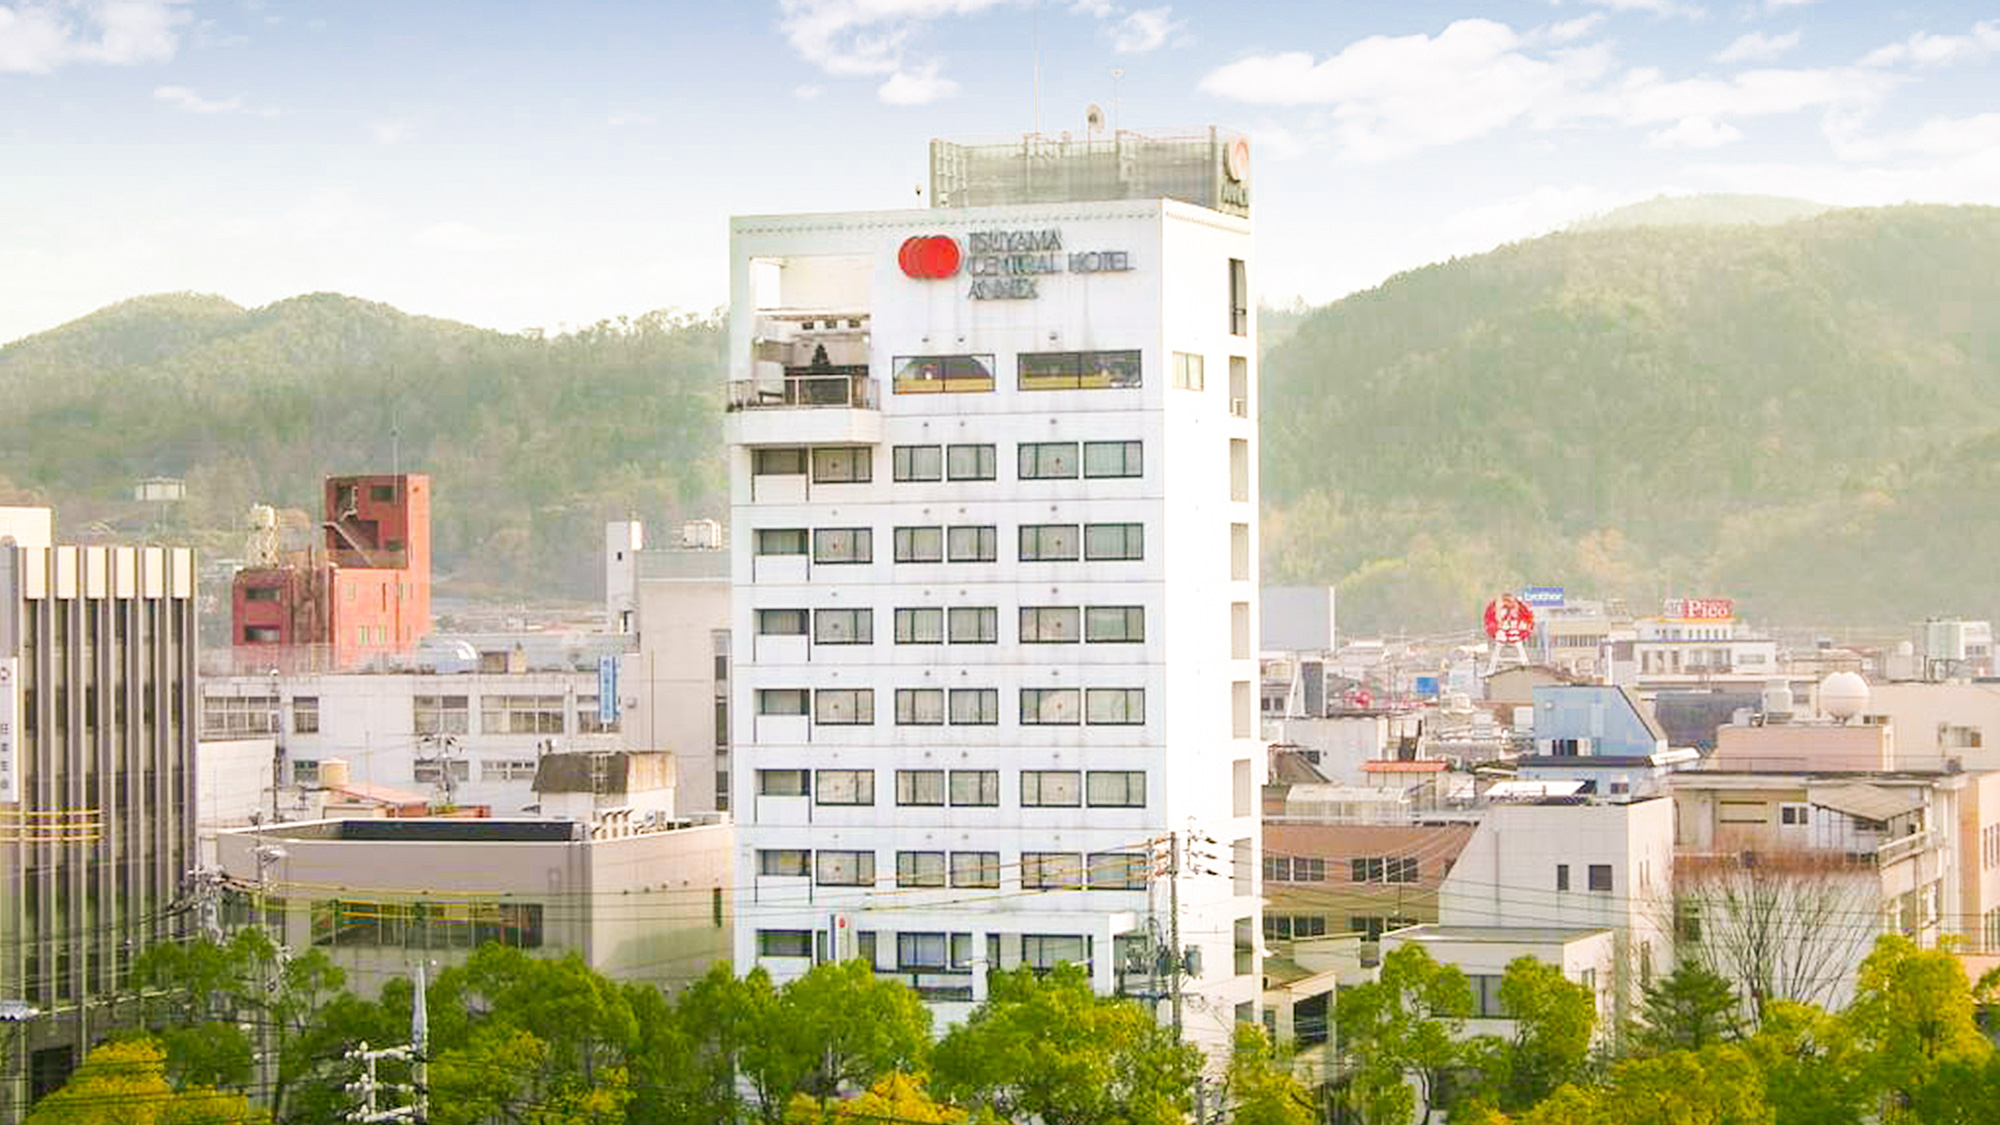 Tsuyama Central Hotel Annex (BBH Hotel Group)